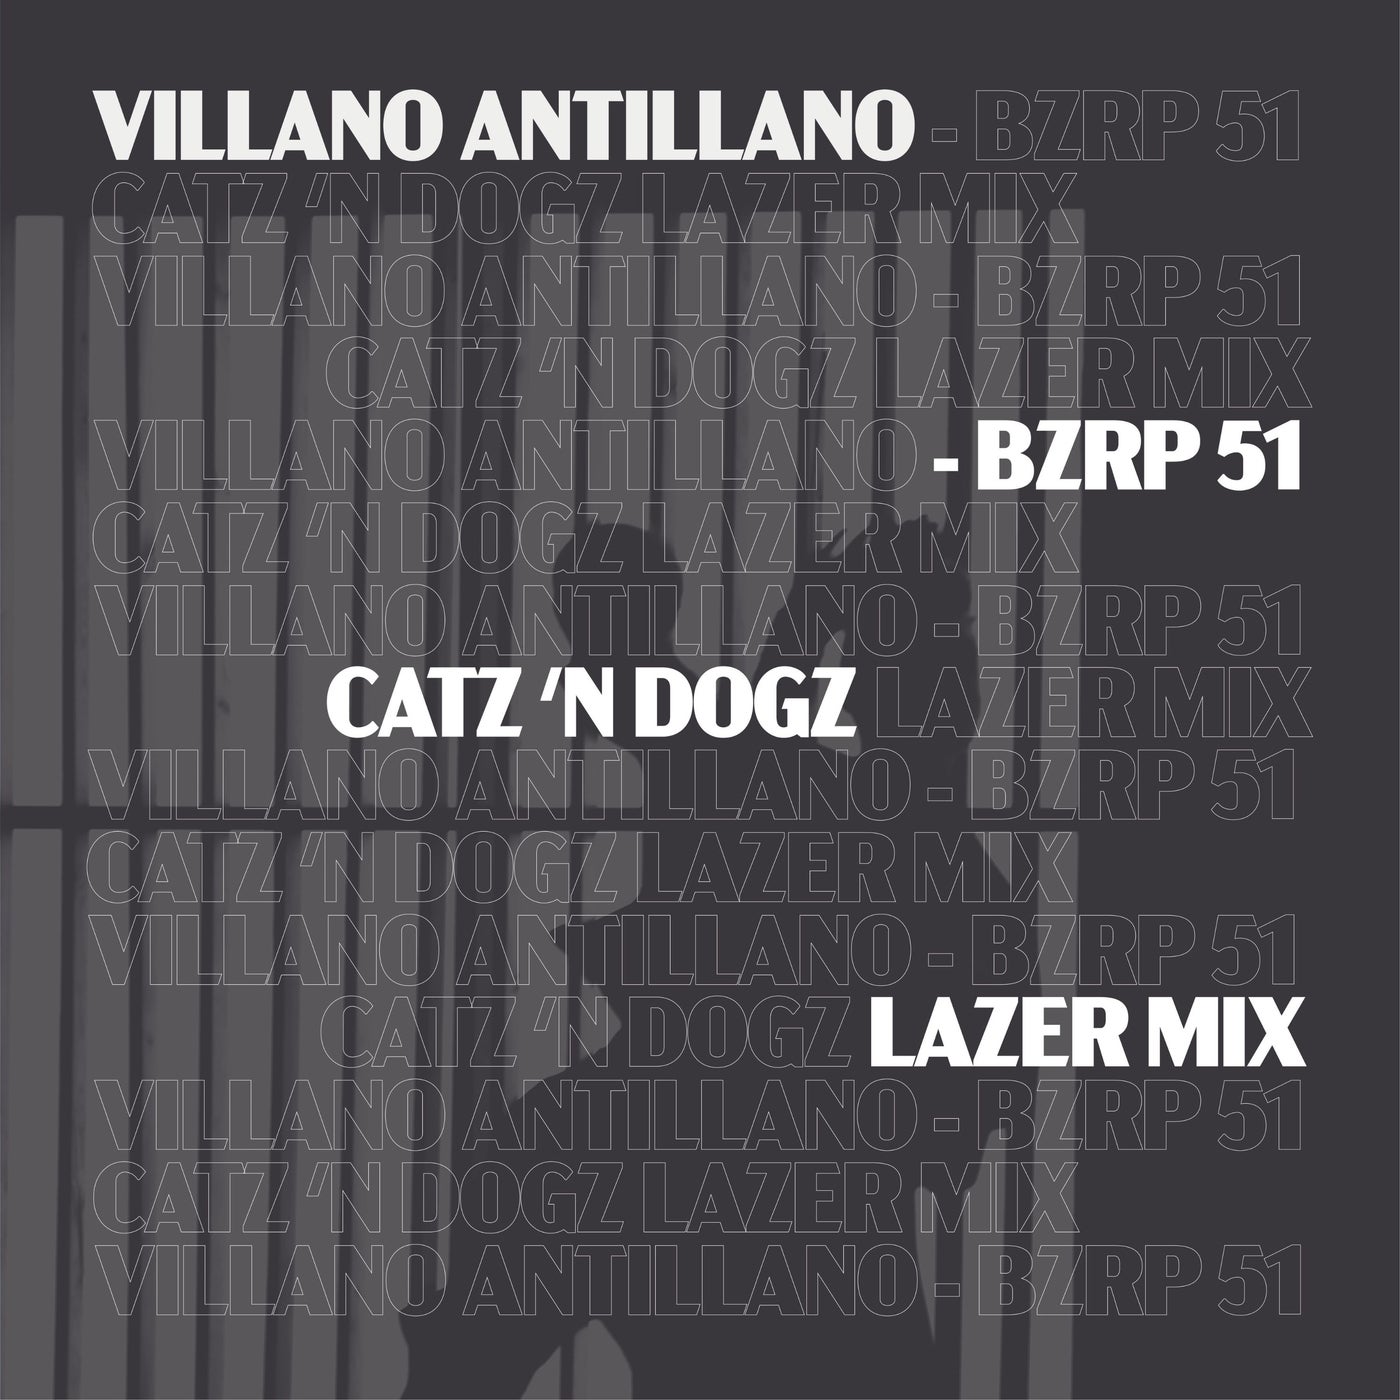 Villano Antillano - Bzrp 51 (Catz 'n Dogz Lazer Mix)